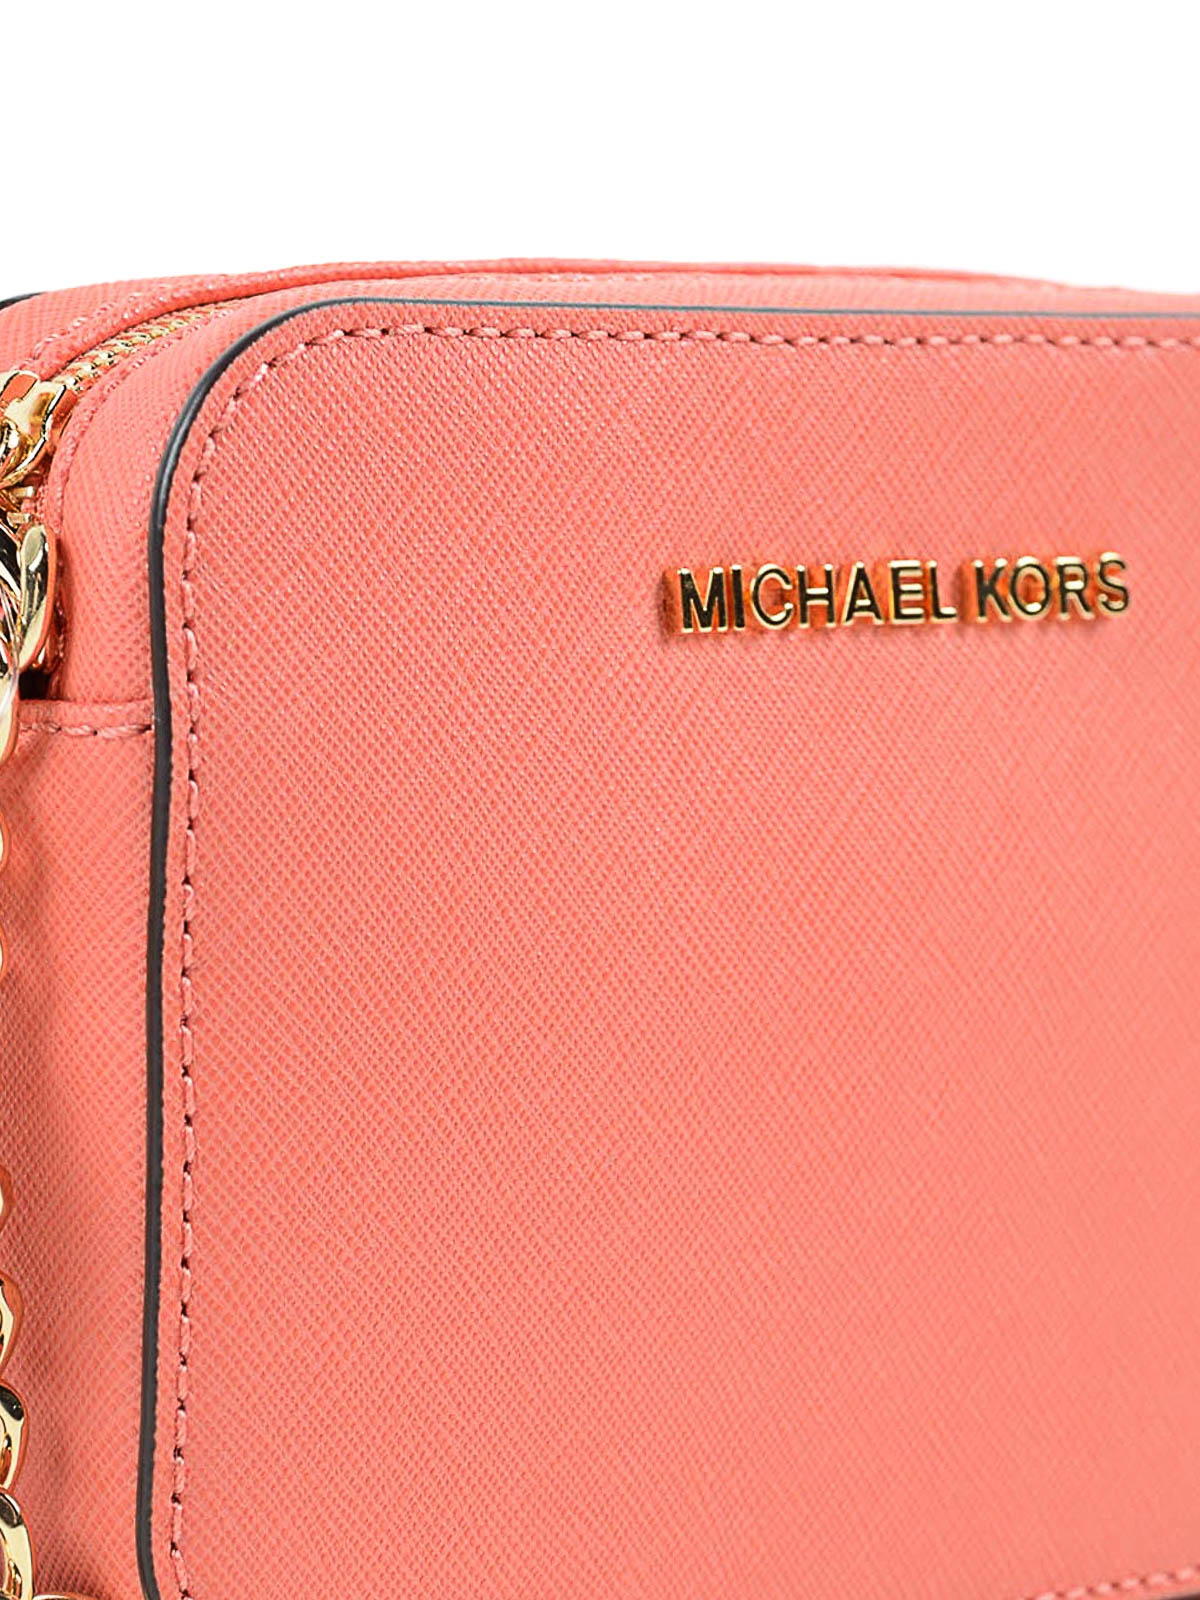 Michael Kors Jet Set Travel Women's Leather Crossbody Bag Coral